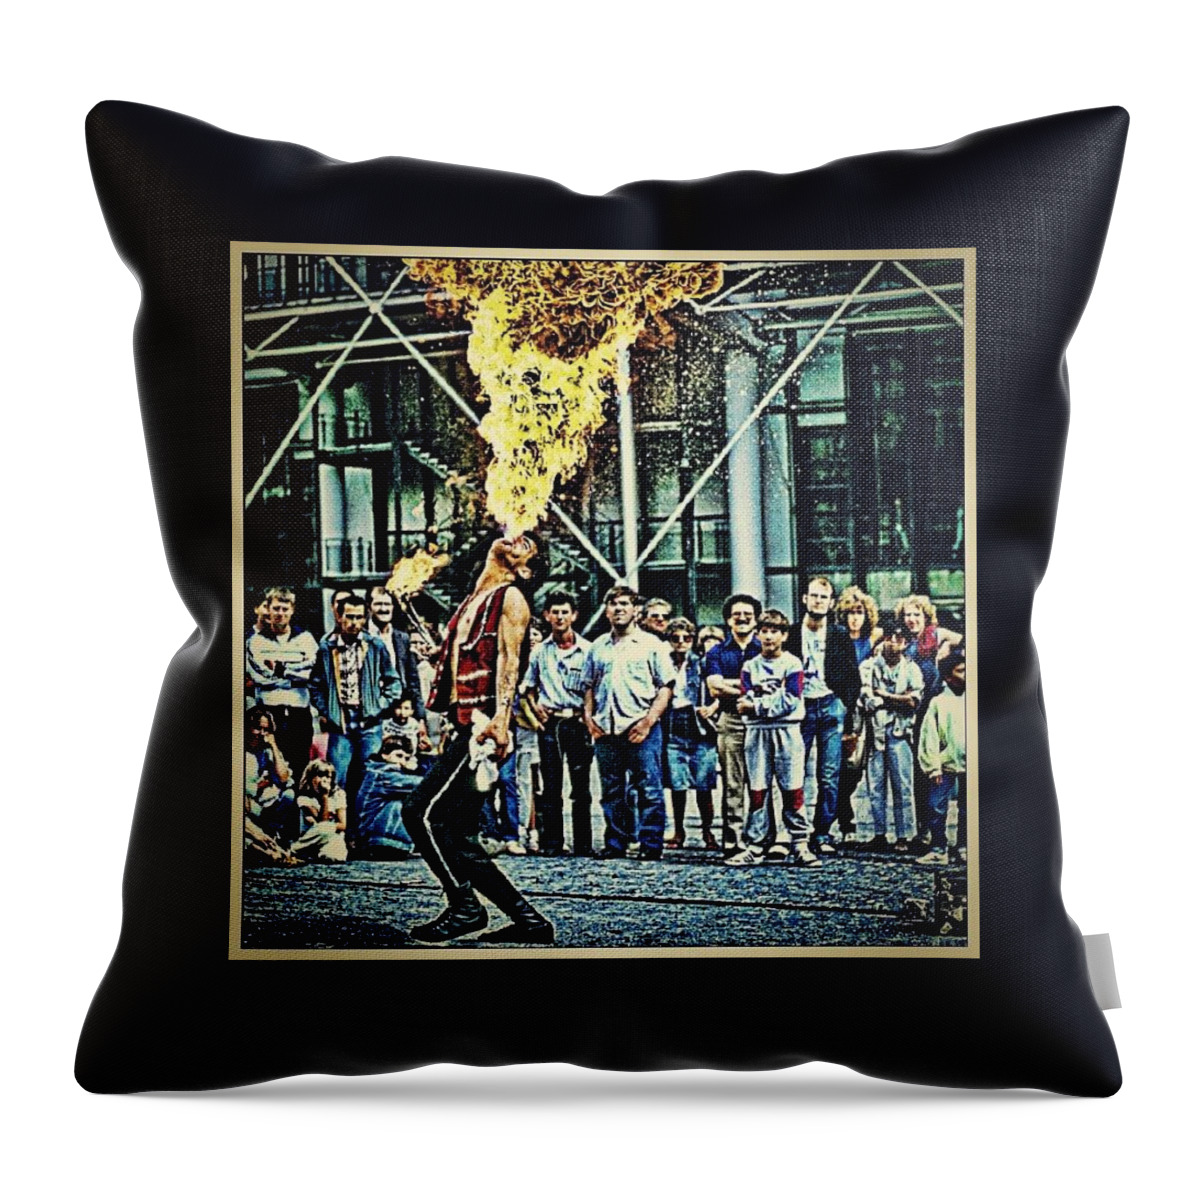 Street Throw Pillow featuring the photograph Paris Street Entertainment by Hans Fotoboek